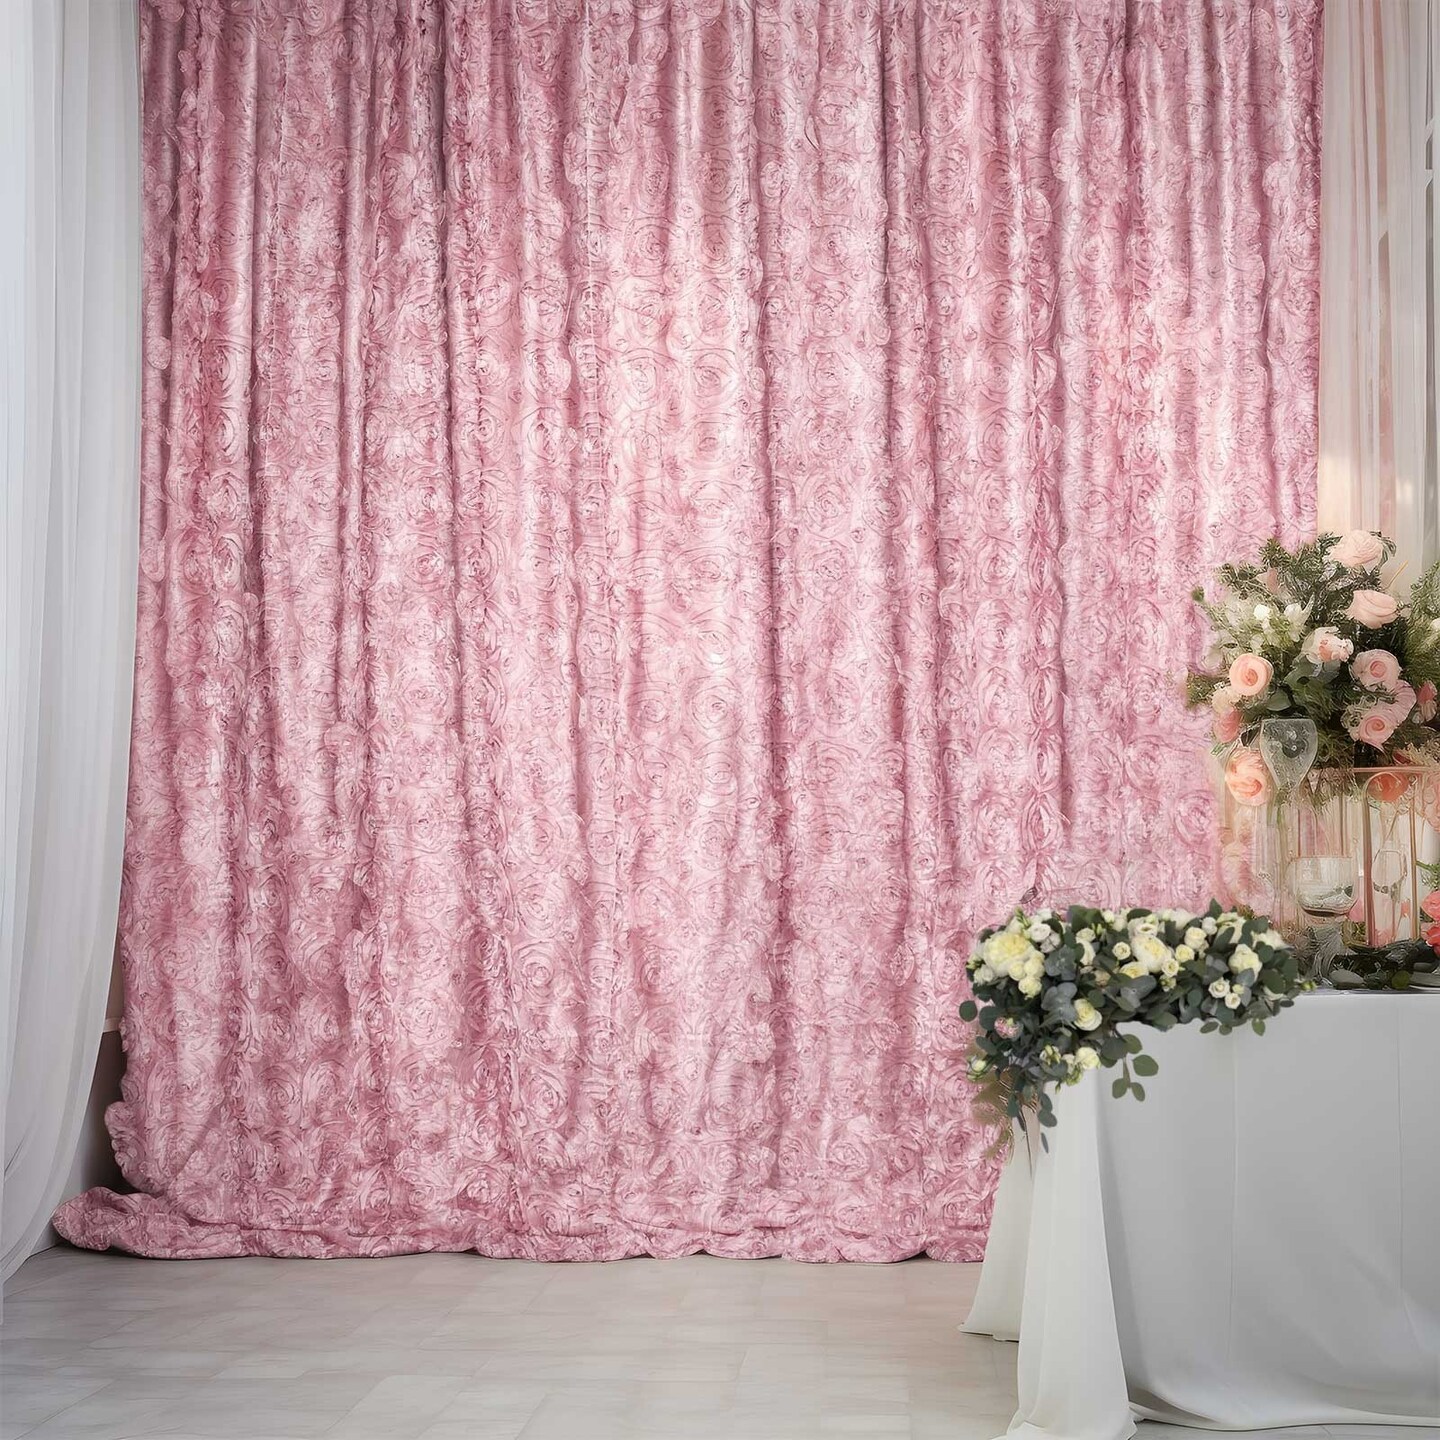 8x8 feet Satin CURTAIN Rosette Wedding Photography Backdrop